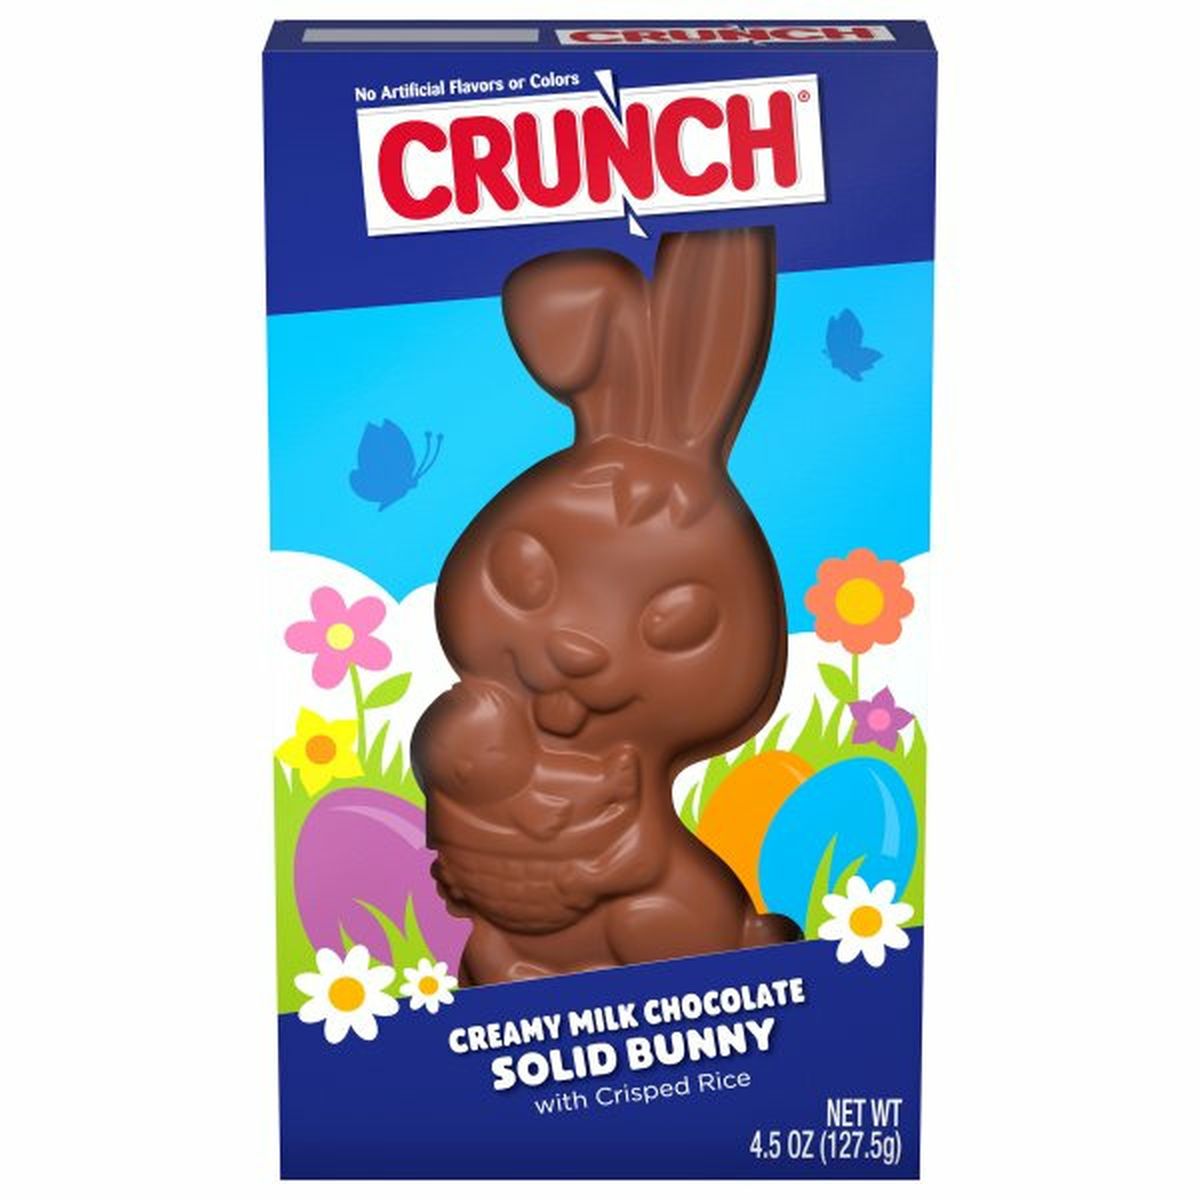 Calories in Crunch Solid Bunny, Creamy Milk Chocolate